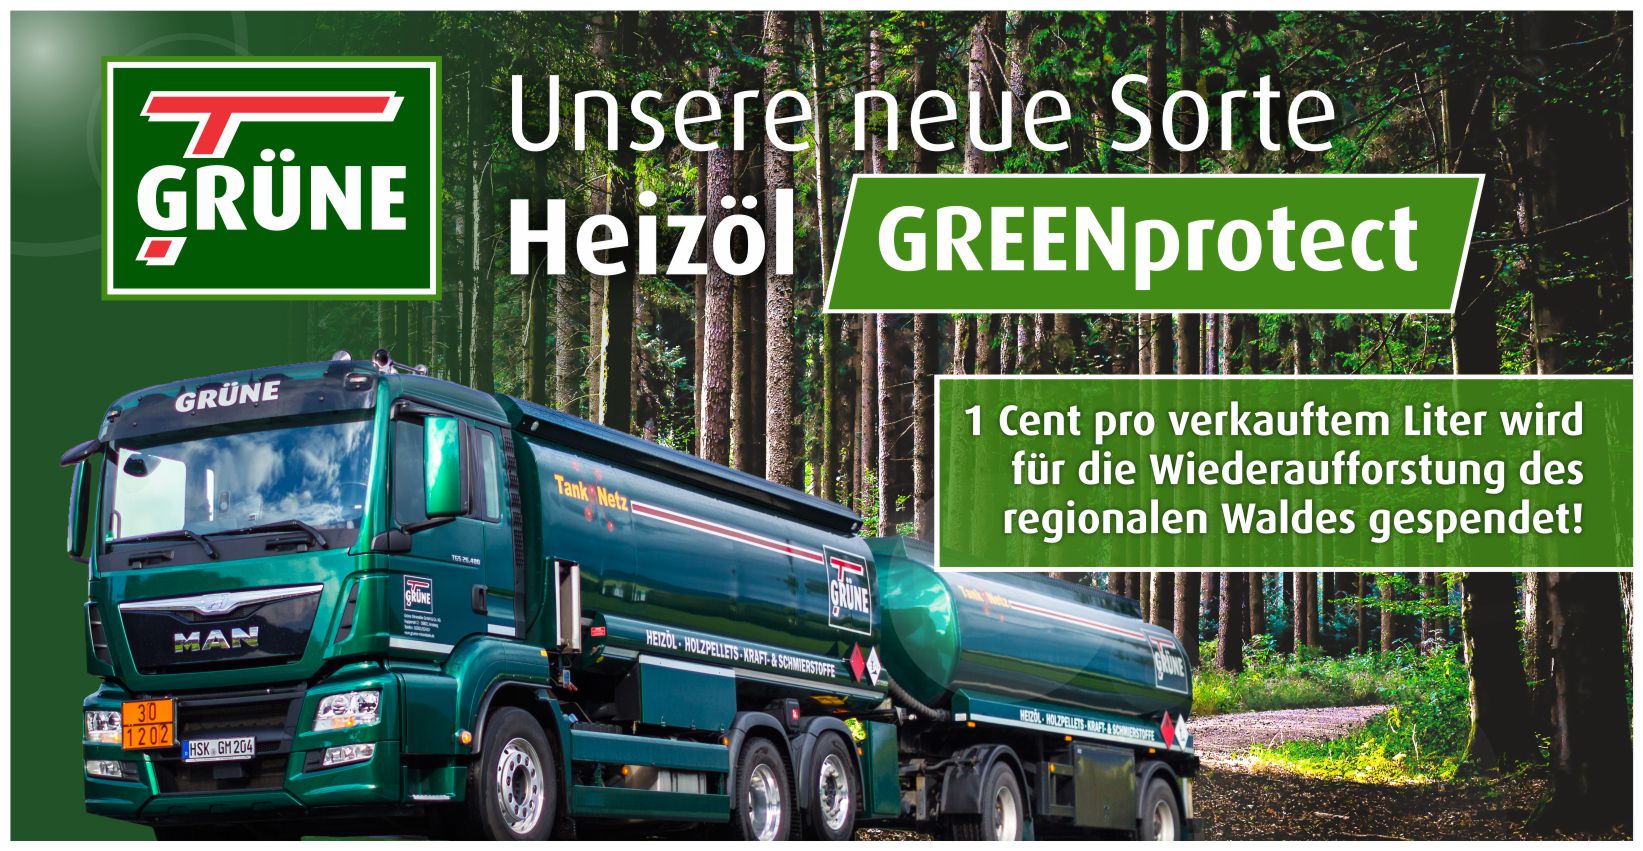 https://www.gruene-mineraloele.de/images/heizoel/heizoel_greenprotect.jpg